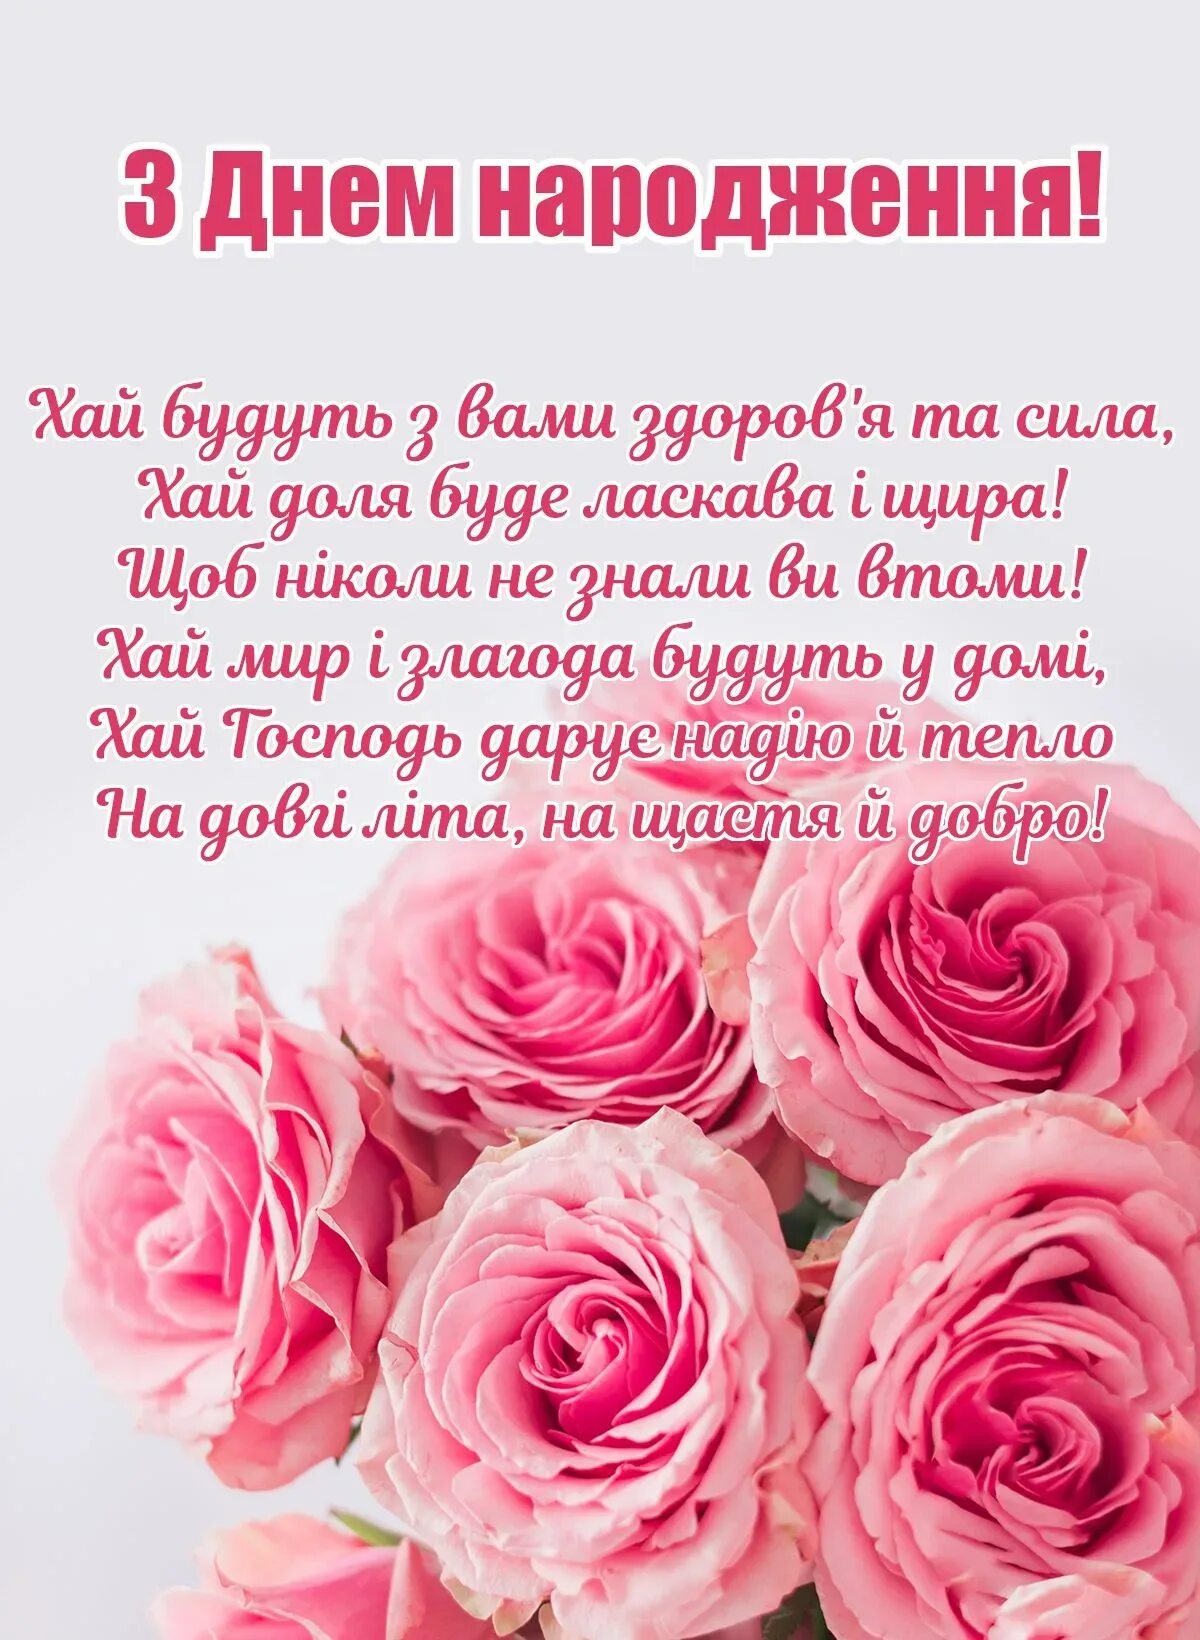 Поздравить с днем рождения на украинском. З днем народження. Привітання з днем народження. Привітаня з днeм народжeня. Вітаю з днем народження.